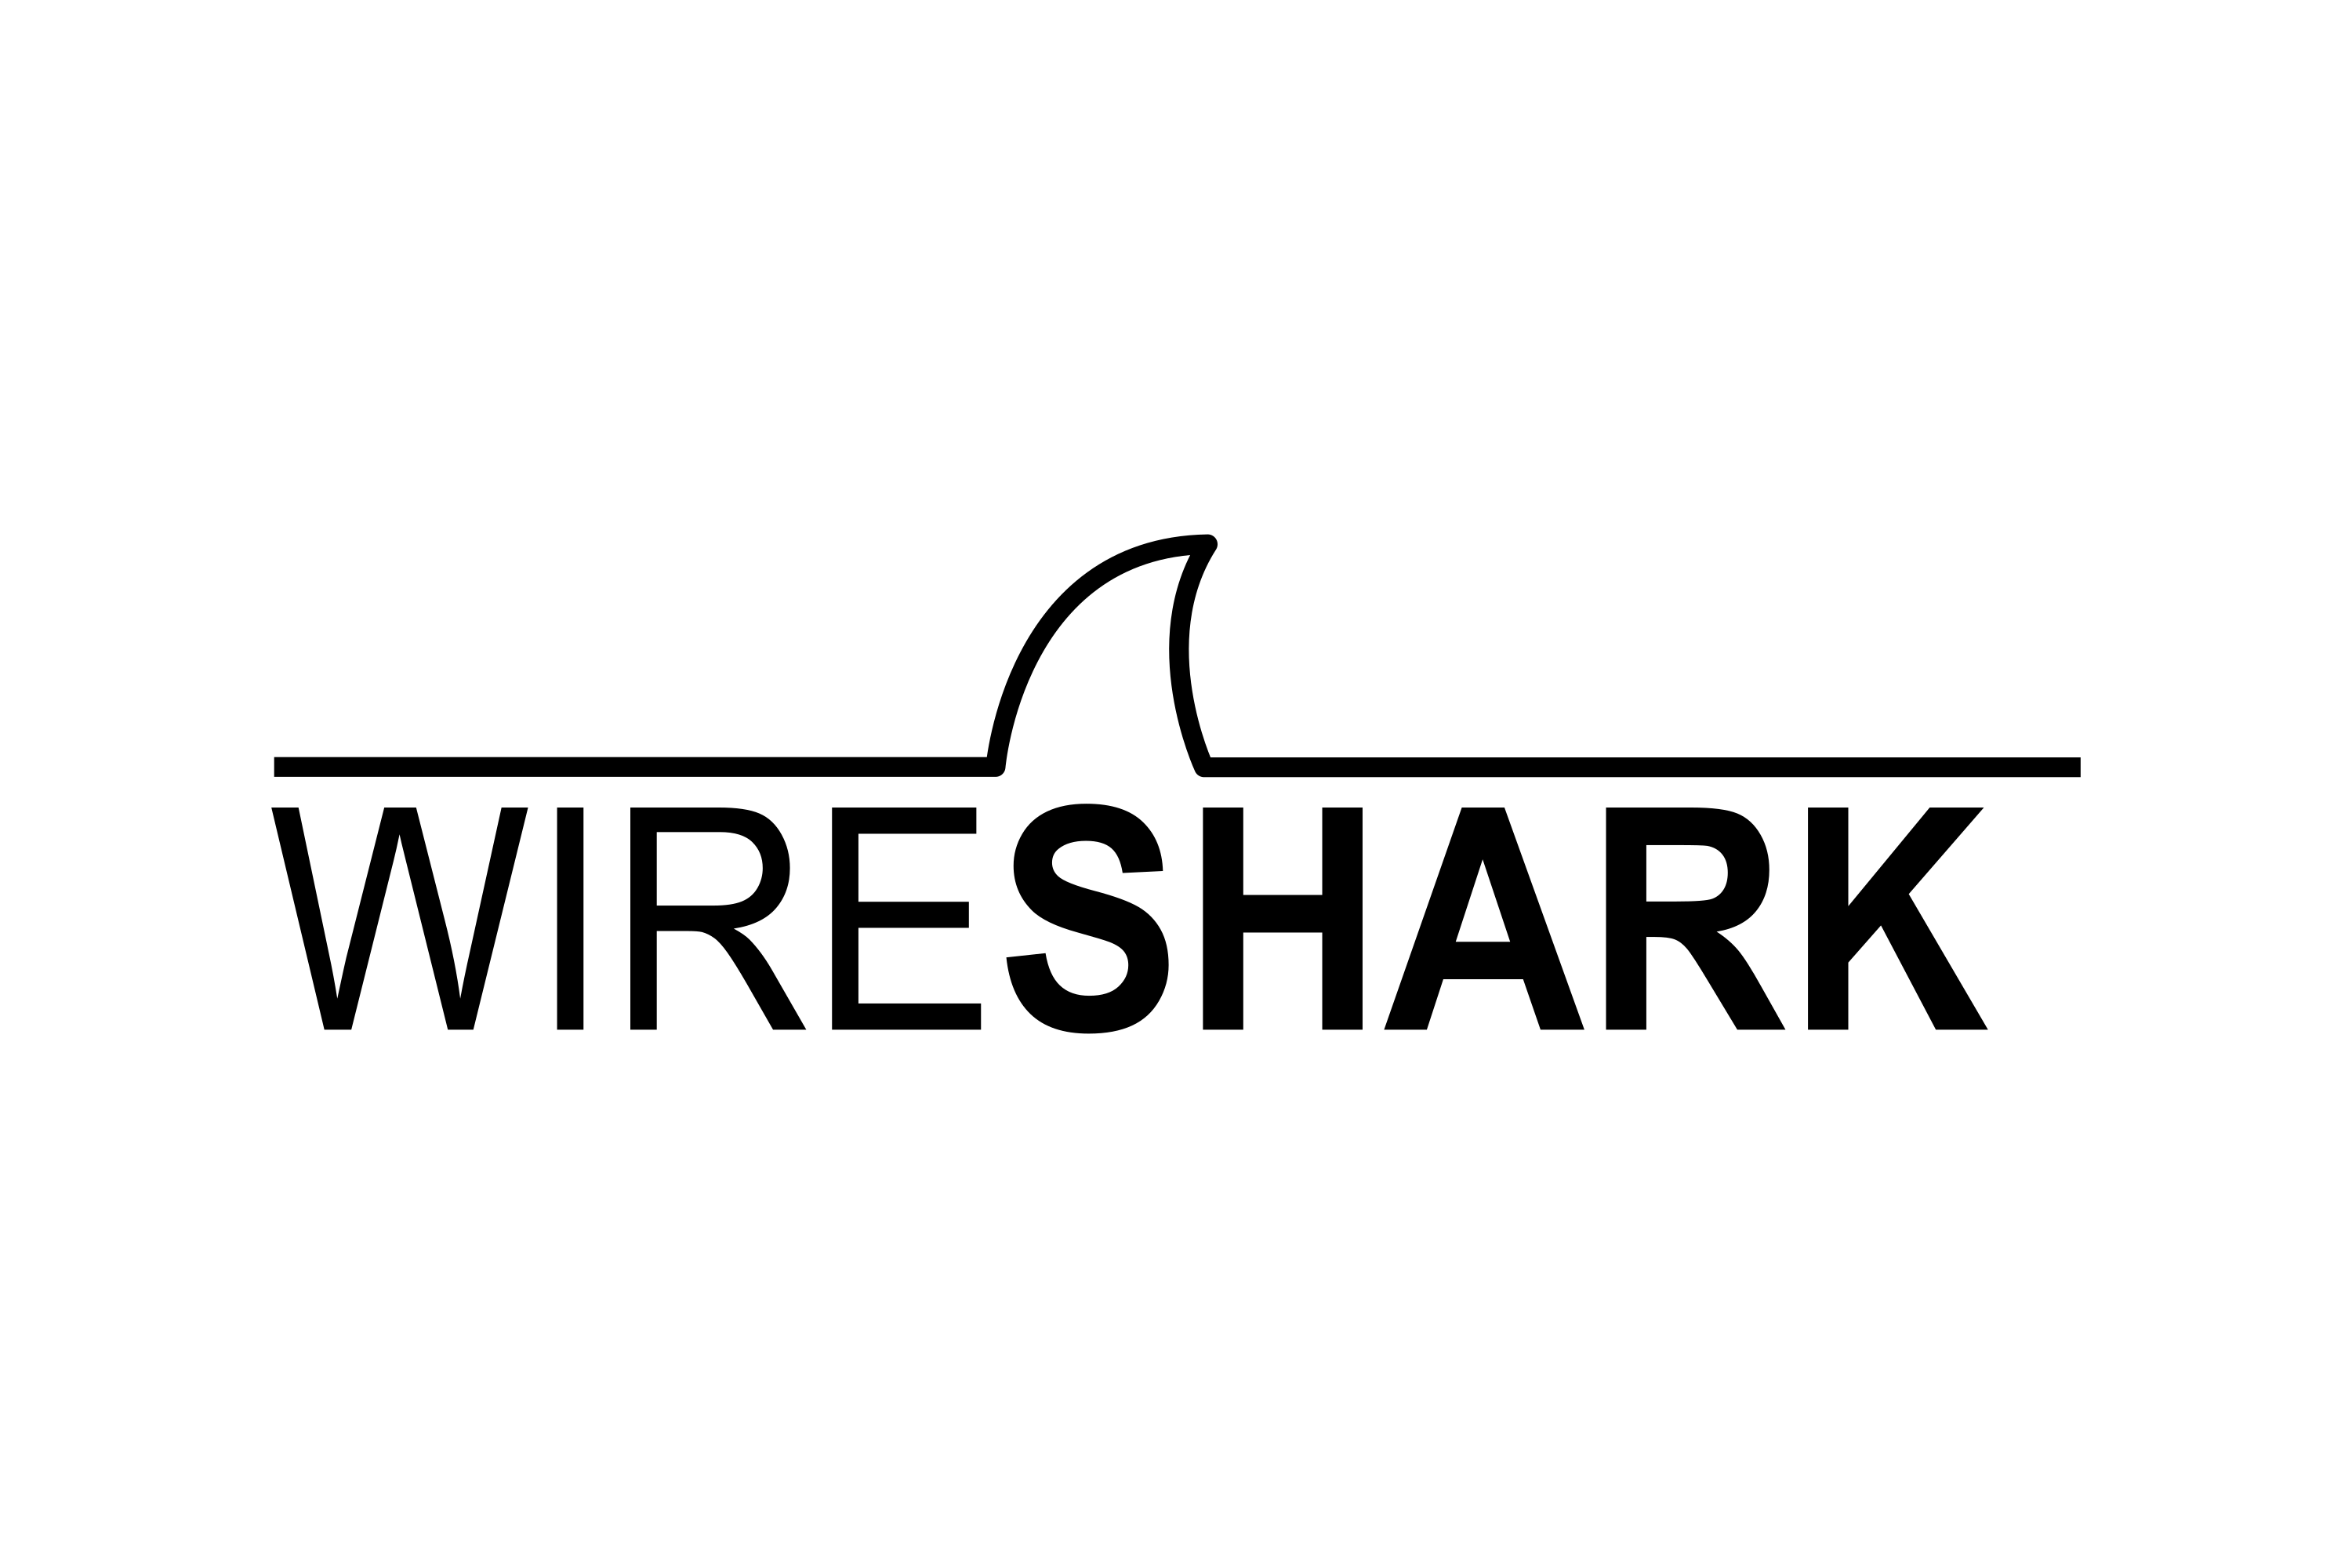 Wireshark. Wireshark logo. Wireshark PNG. Wireshark logo PNG. Wireshark download